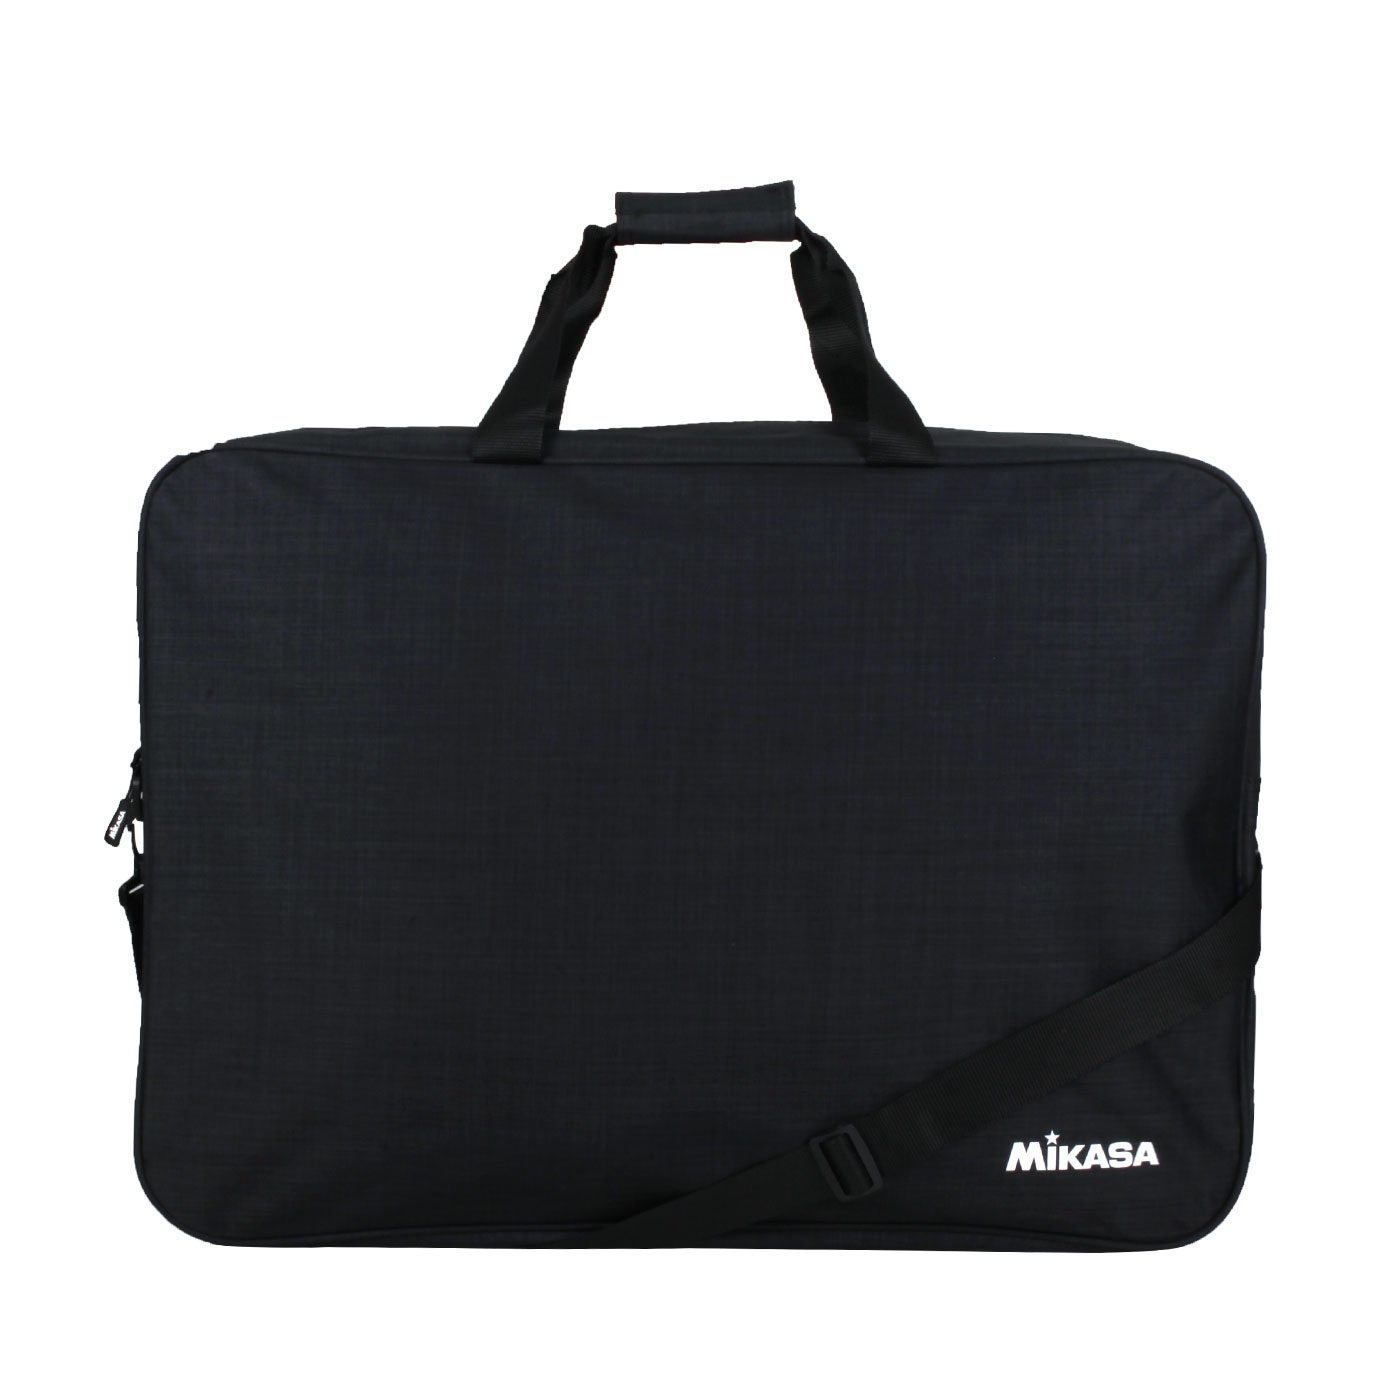 MIKASA 排球袋(6顆裝) MKAGBGM60BK - 黑白